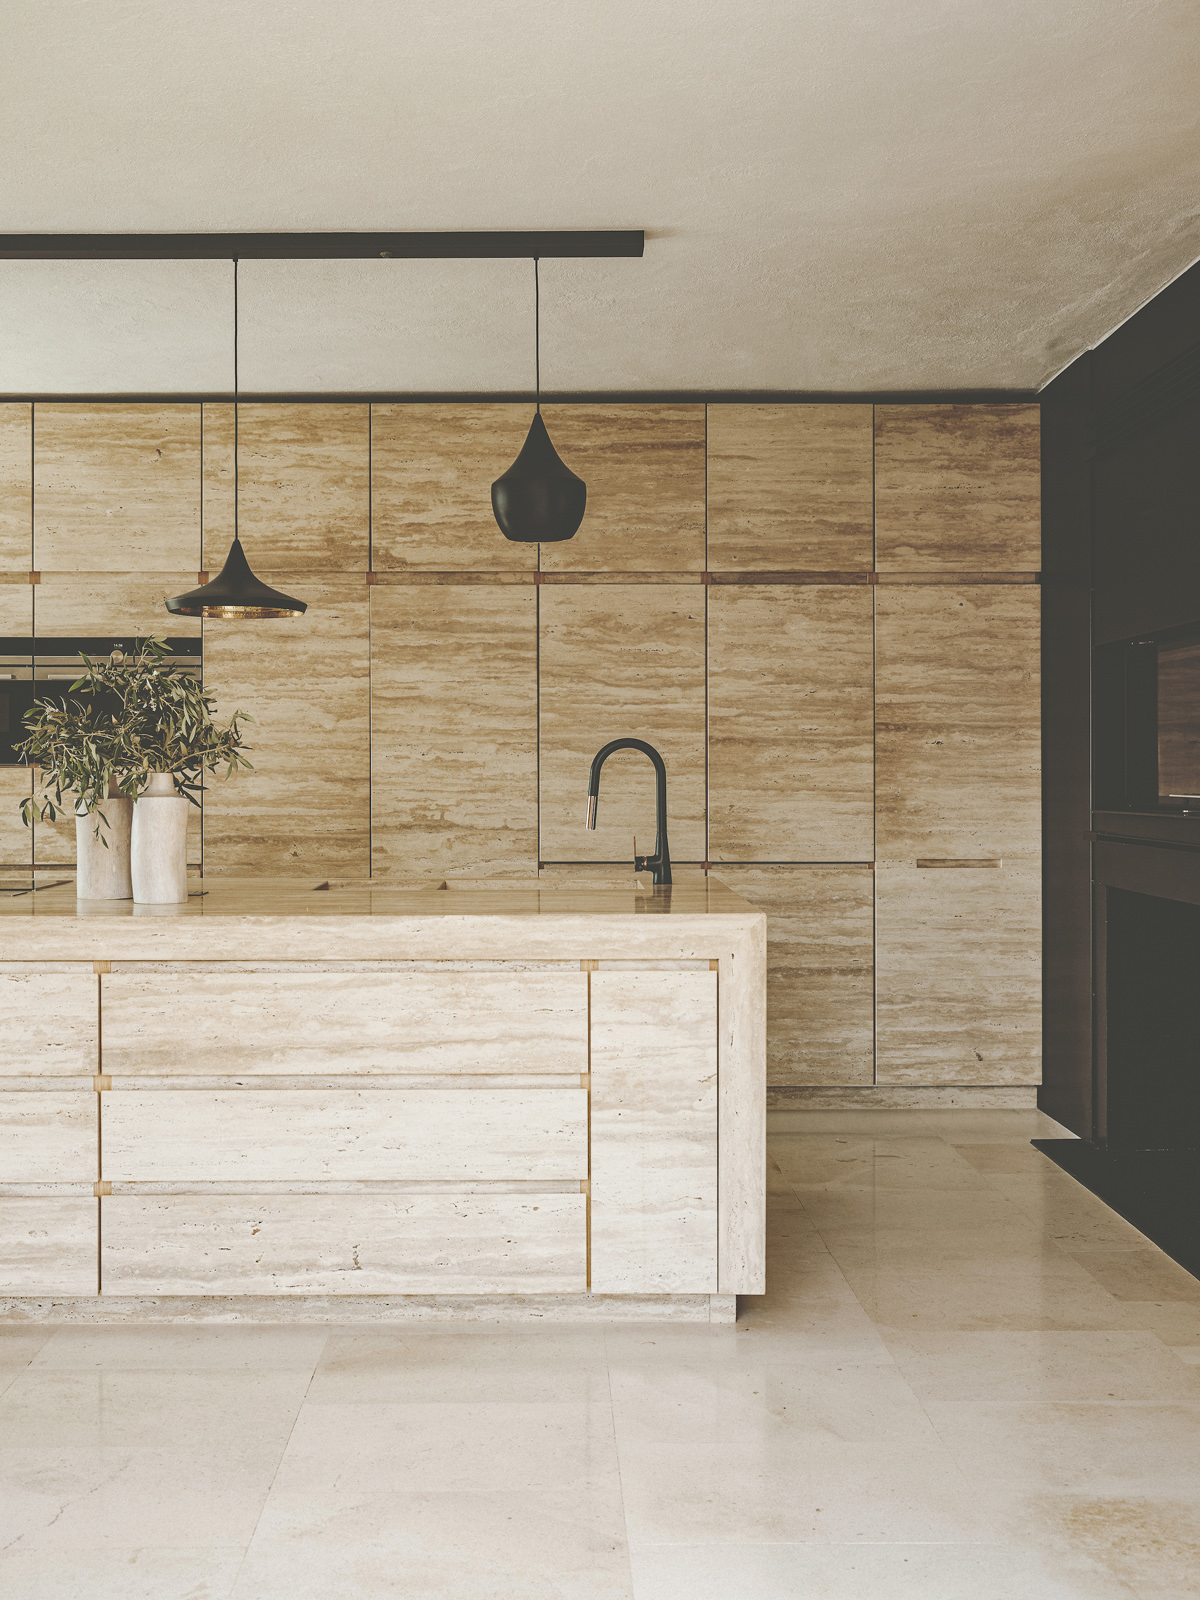 Kitchen designed by Indigo Architecture photographed by Salva Lopez